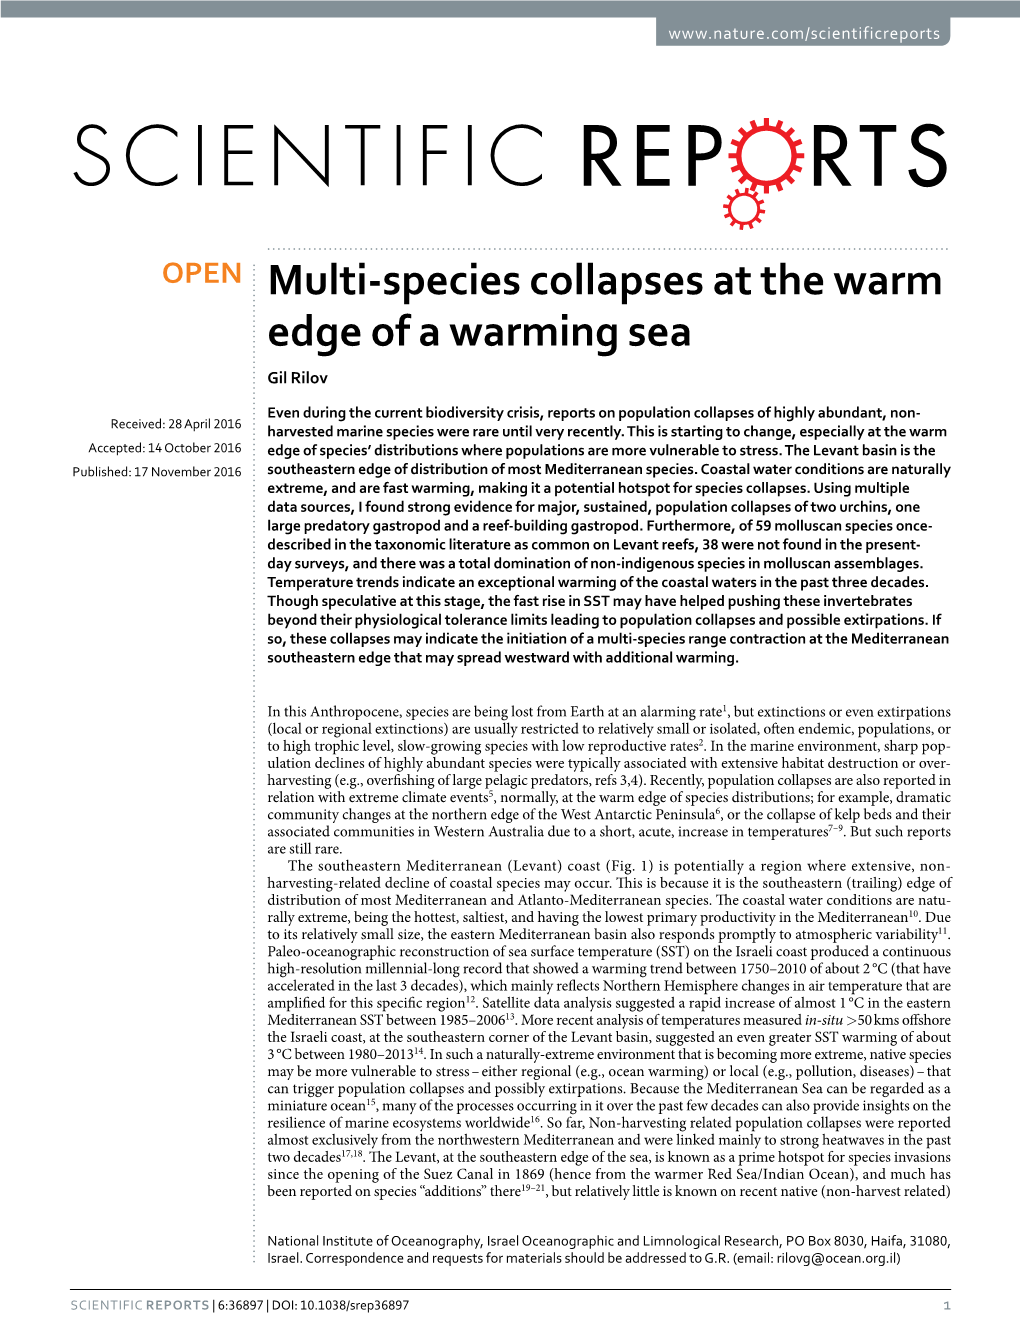 Multi-Species Collapses at the Warm Edge of a Warming Sea Gil Rilov